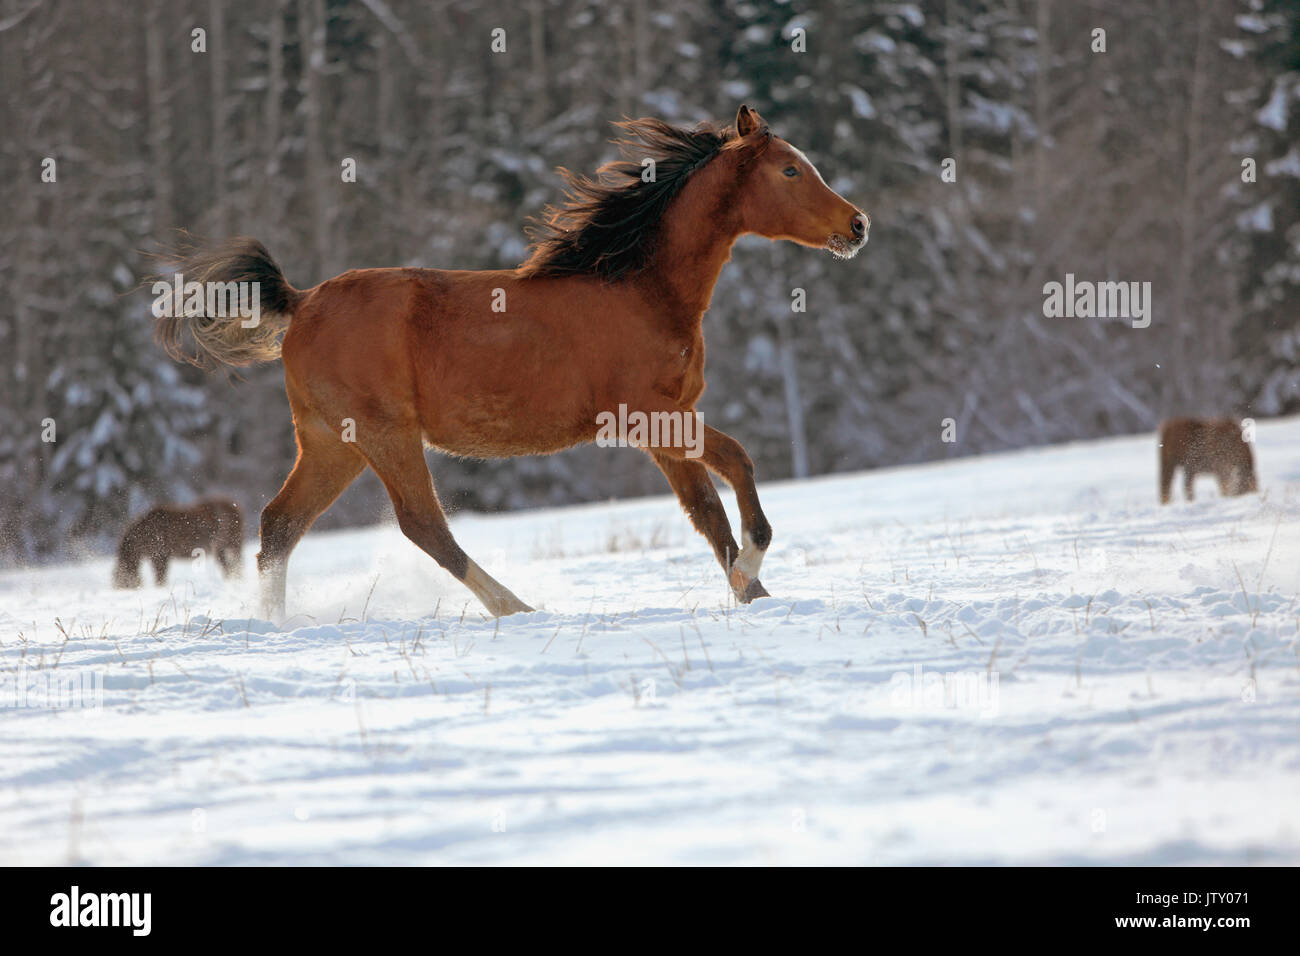 Reinrassige Bay Arabian Horse im Feld auf Neuschnee Stockfoto